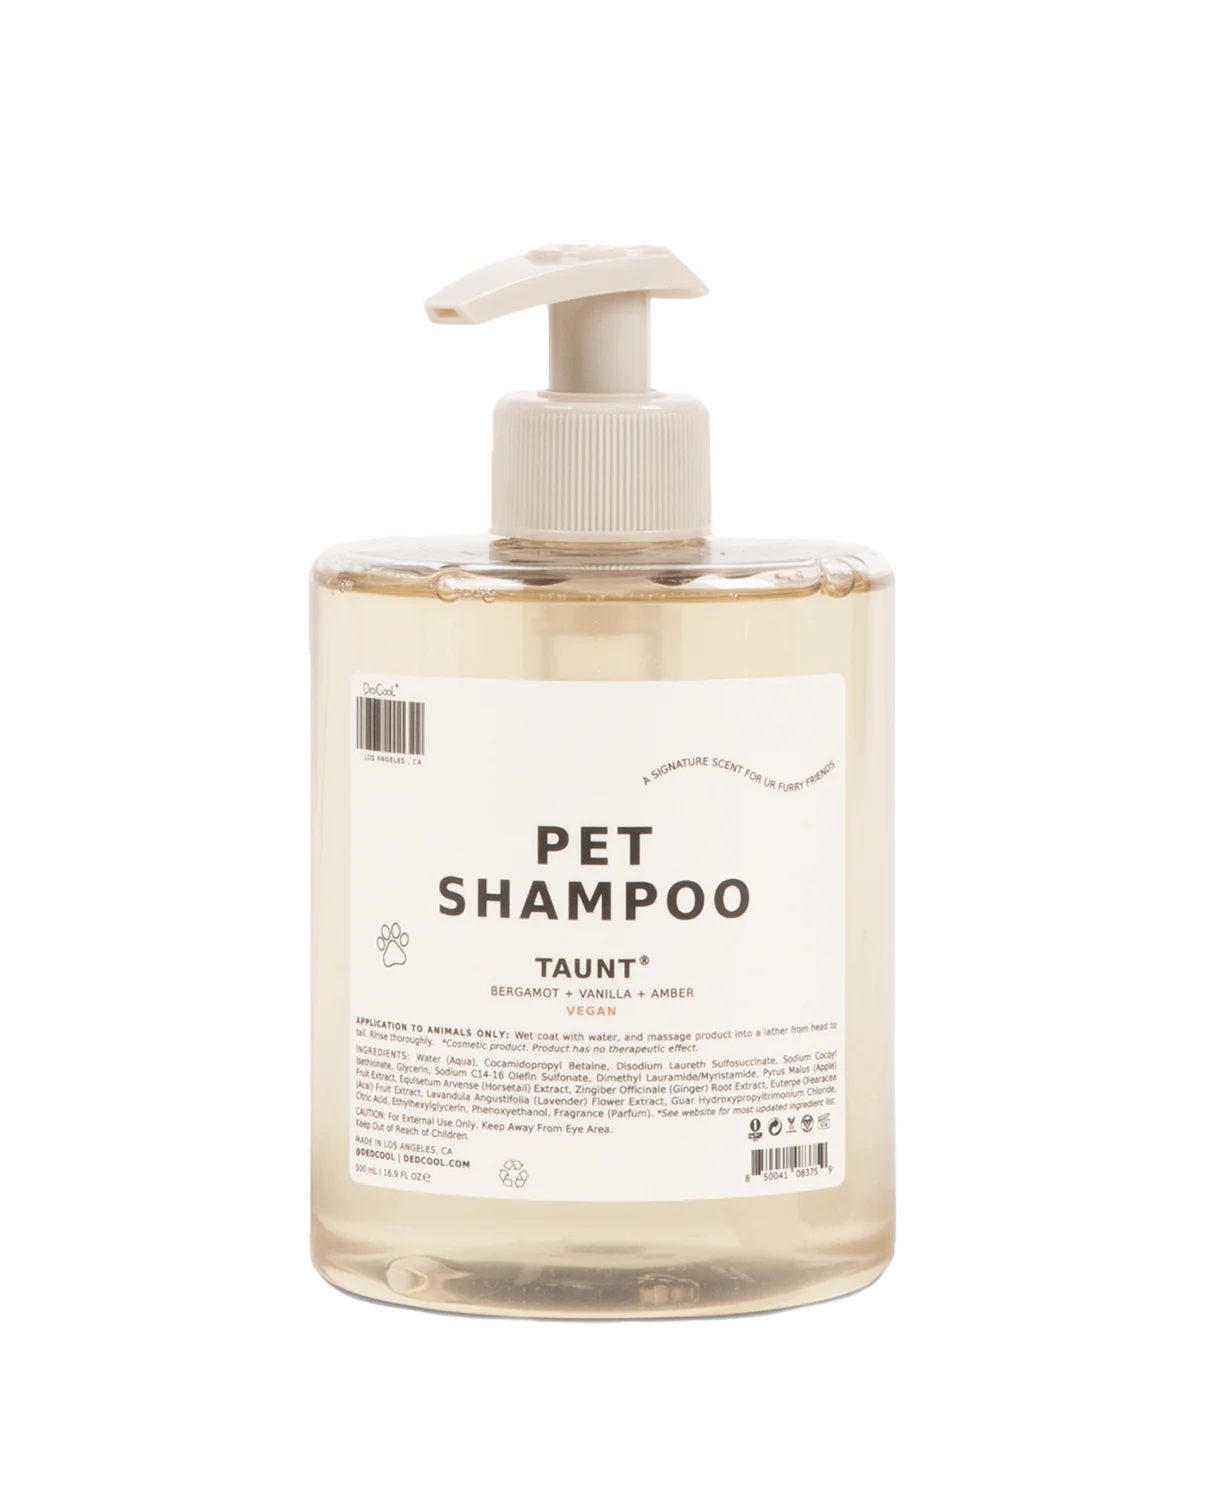 Pet Shampoo 01 "Taunt"